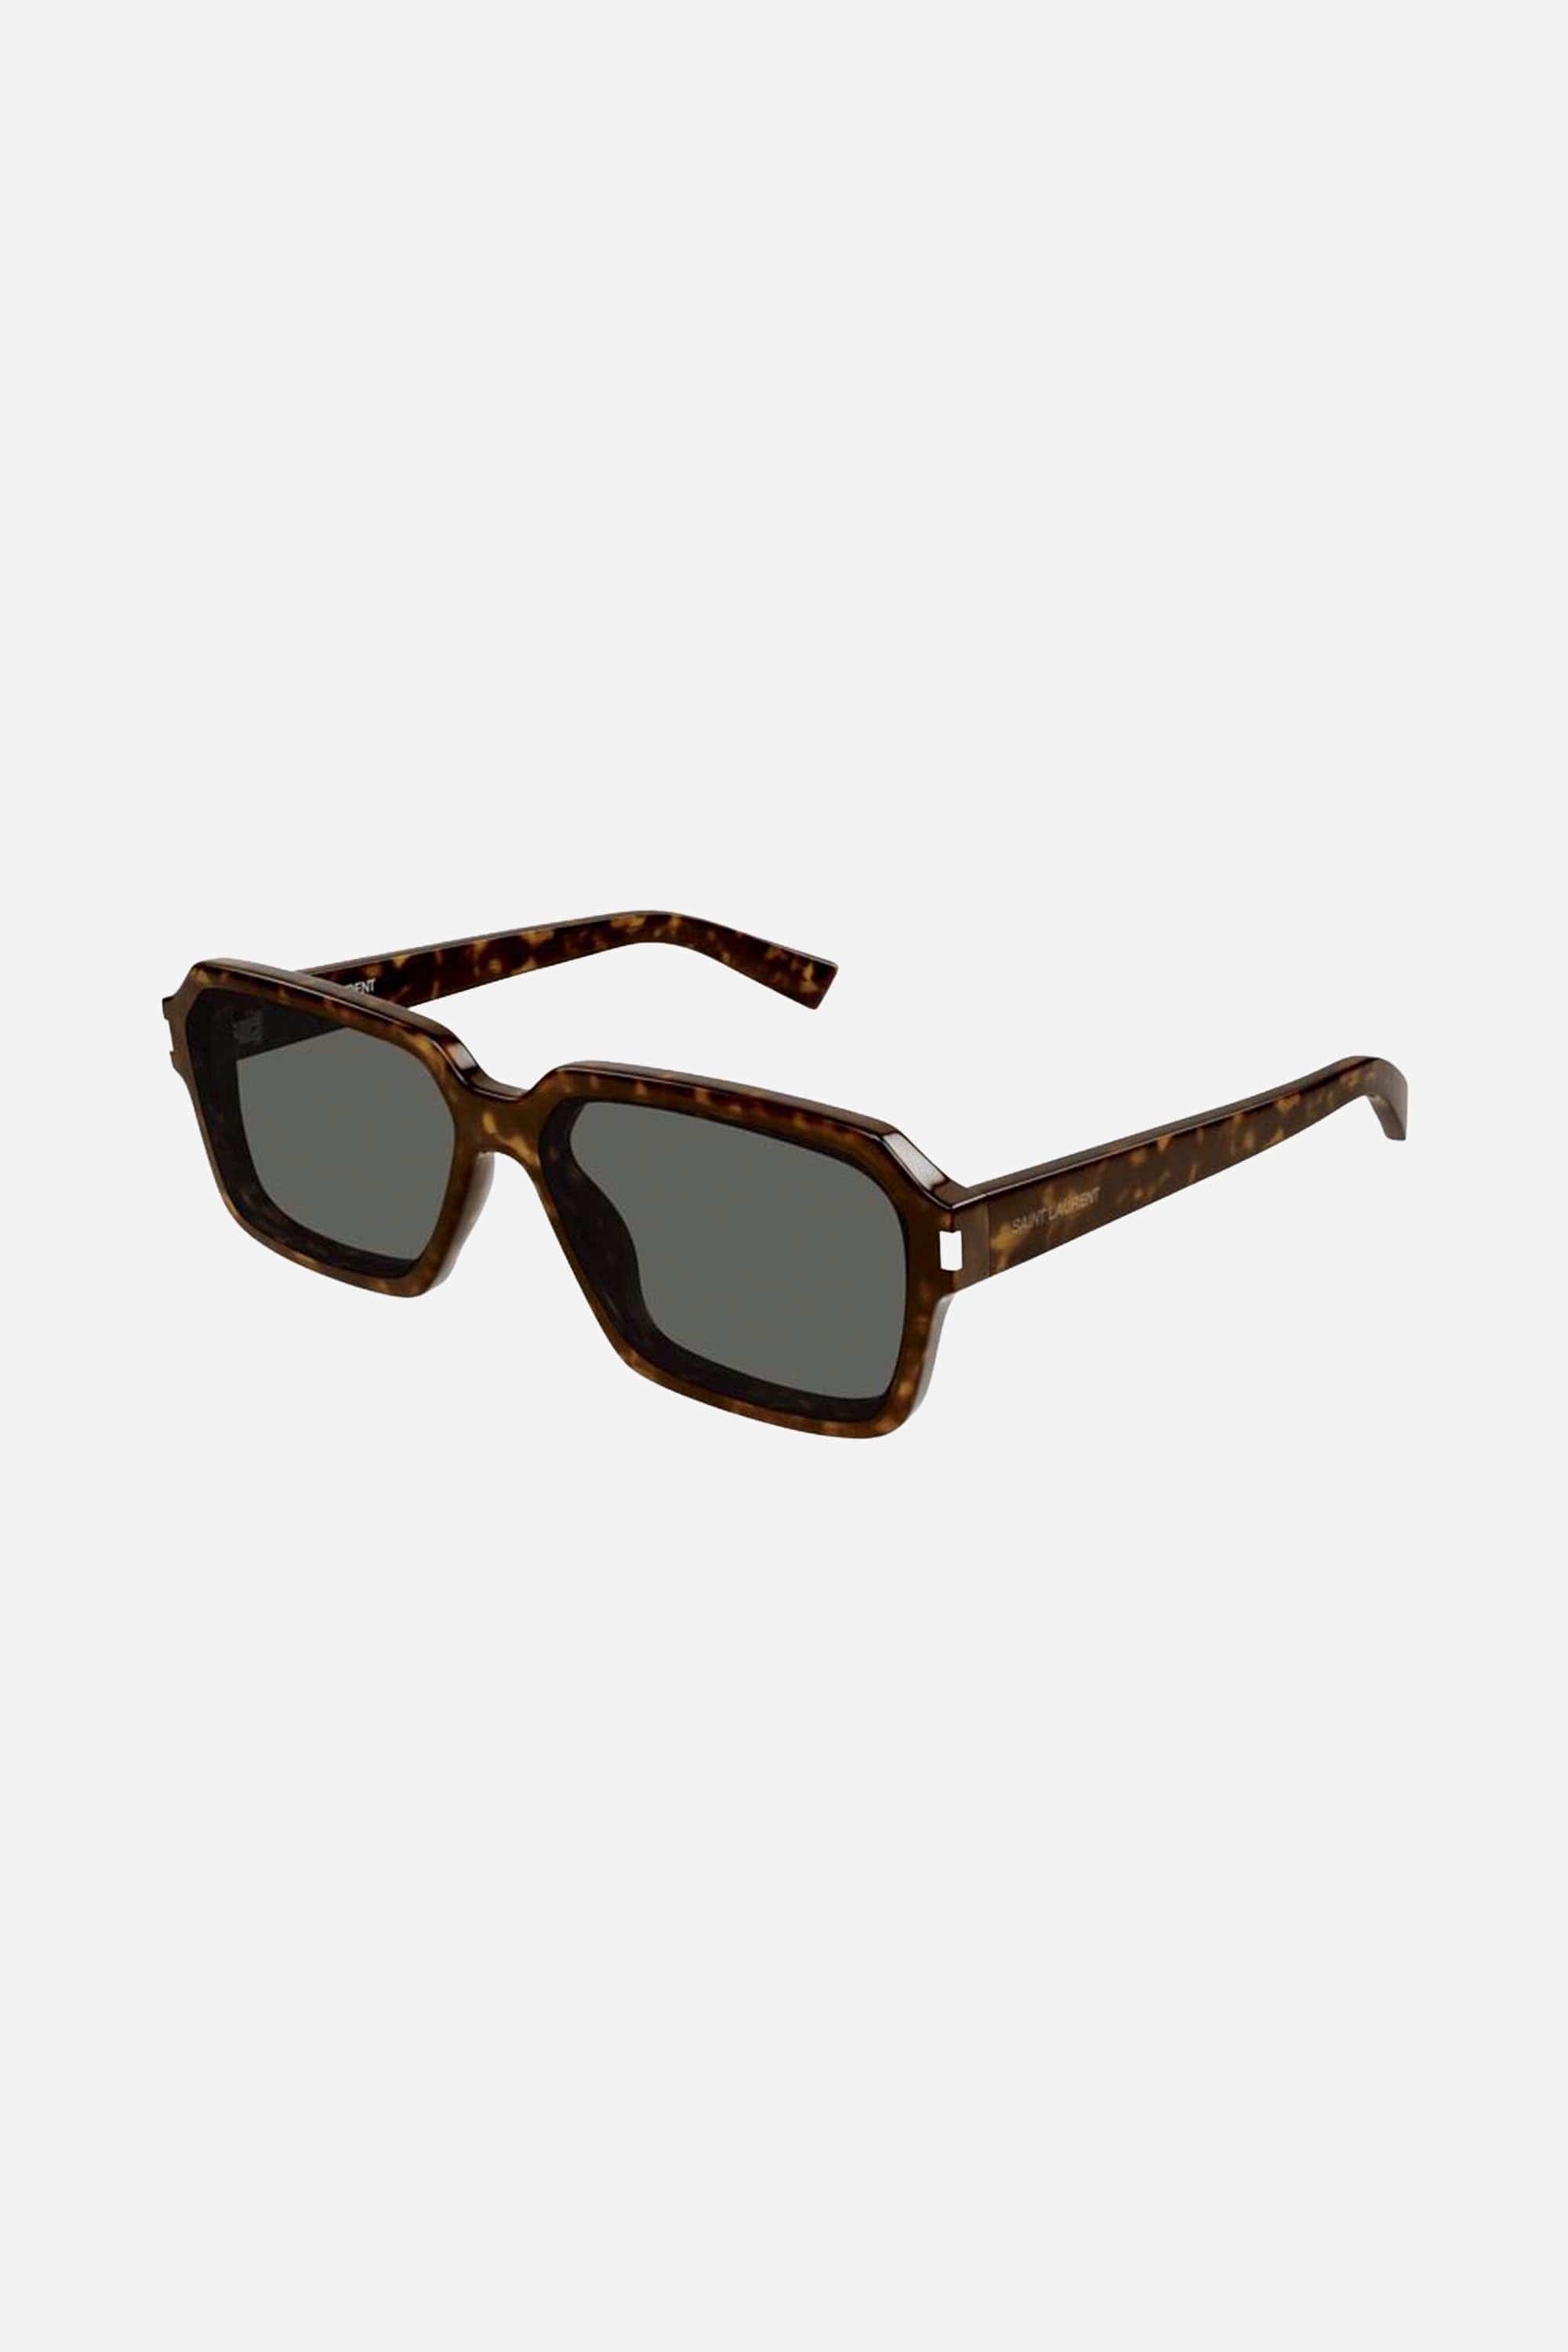 Saint Laurent SL 611/F squared havana sunglasses - Eyewear Club